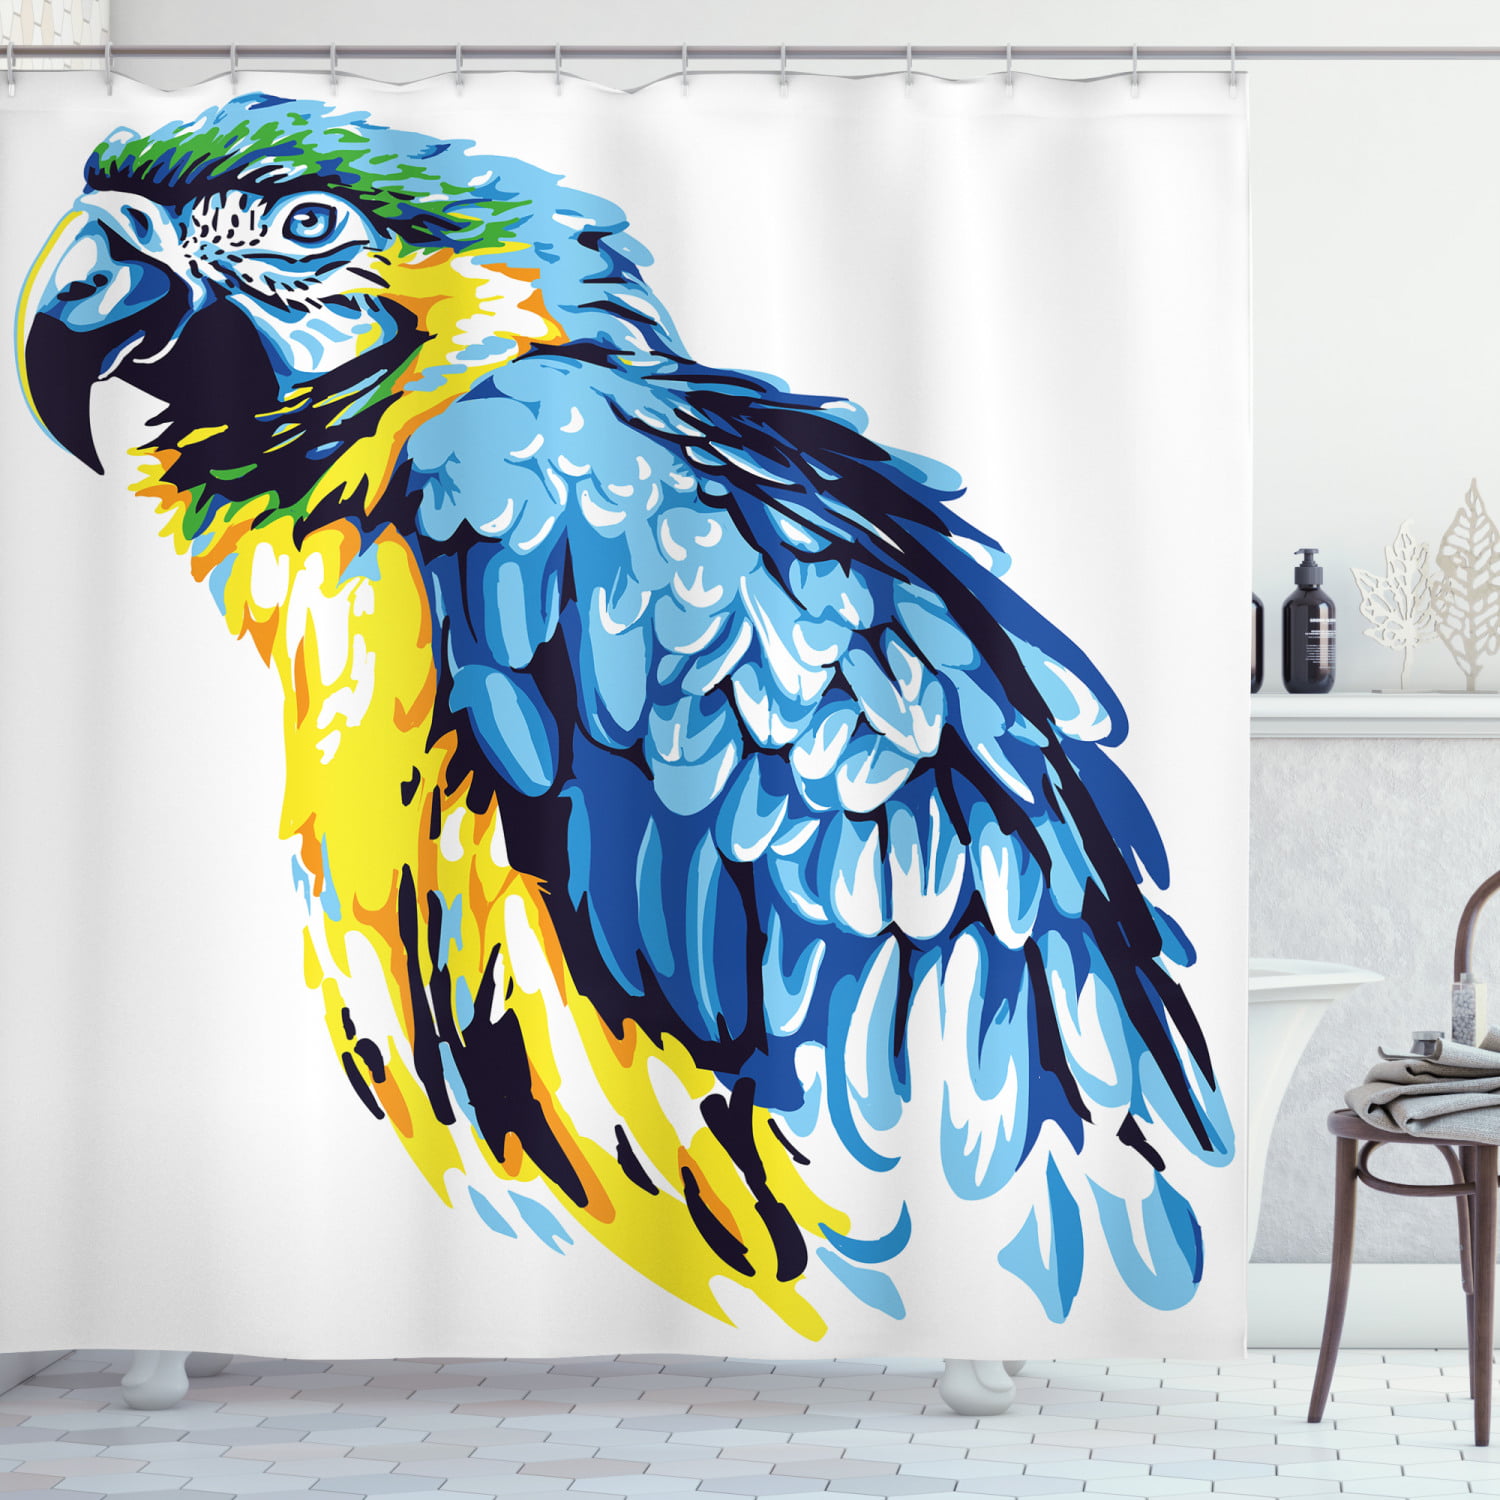 Blue Macaw Shower Curtain Bathroom Decor Waterproof Fabric & 12hooks 71x71inches 